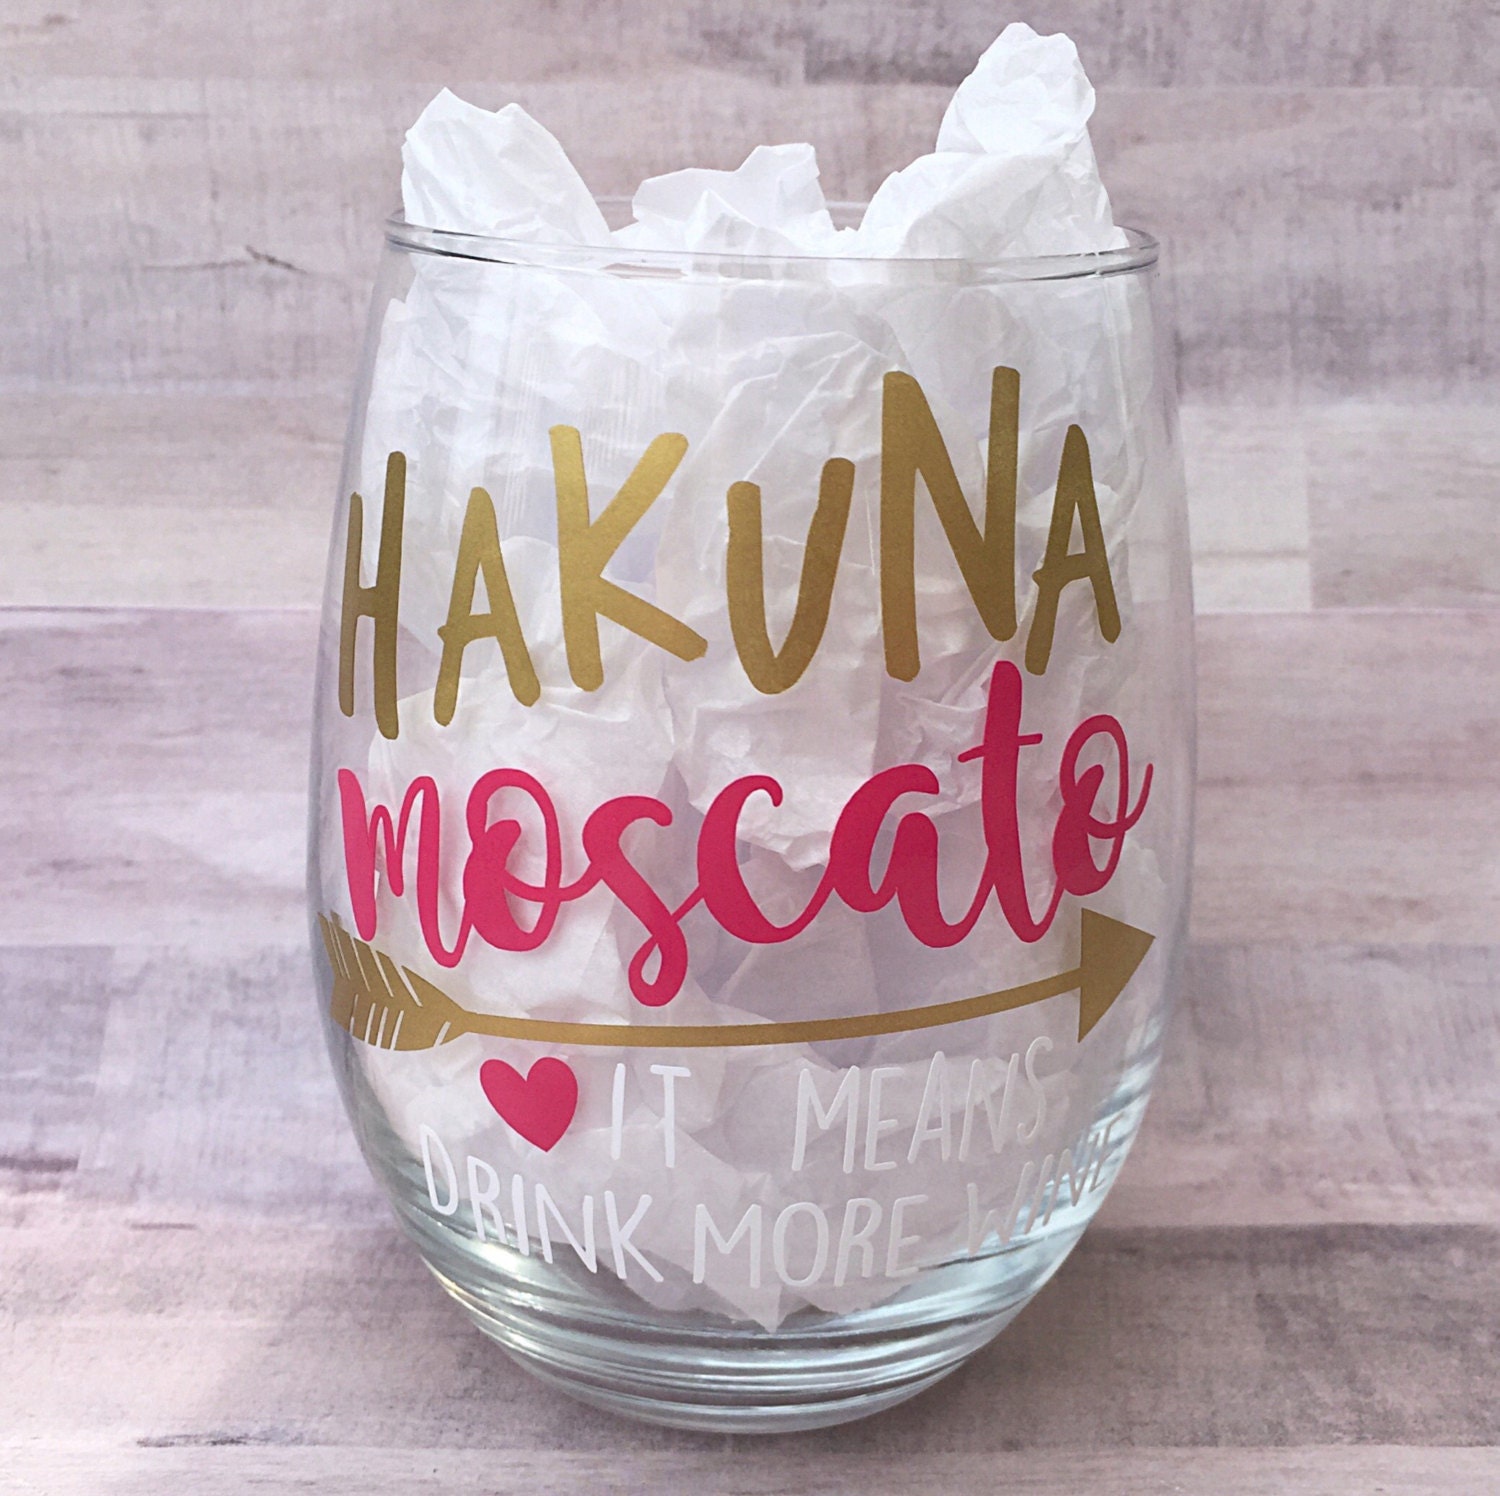 Download Hakuna Moscato Wine Glass Stemless Wine Glass Best Friend